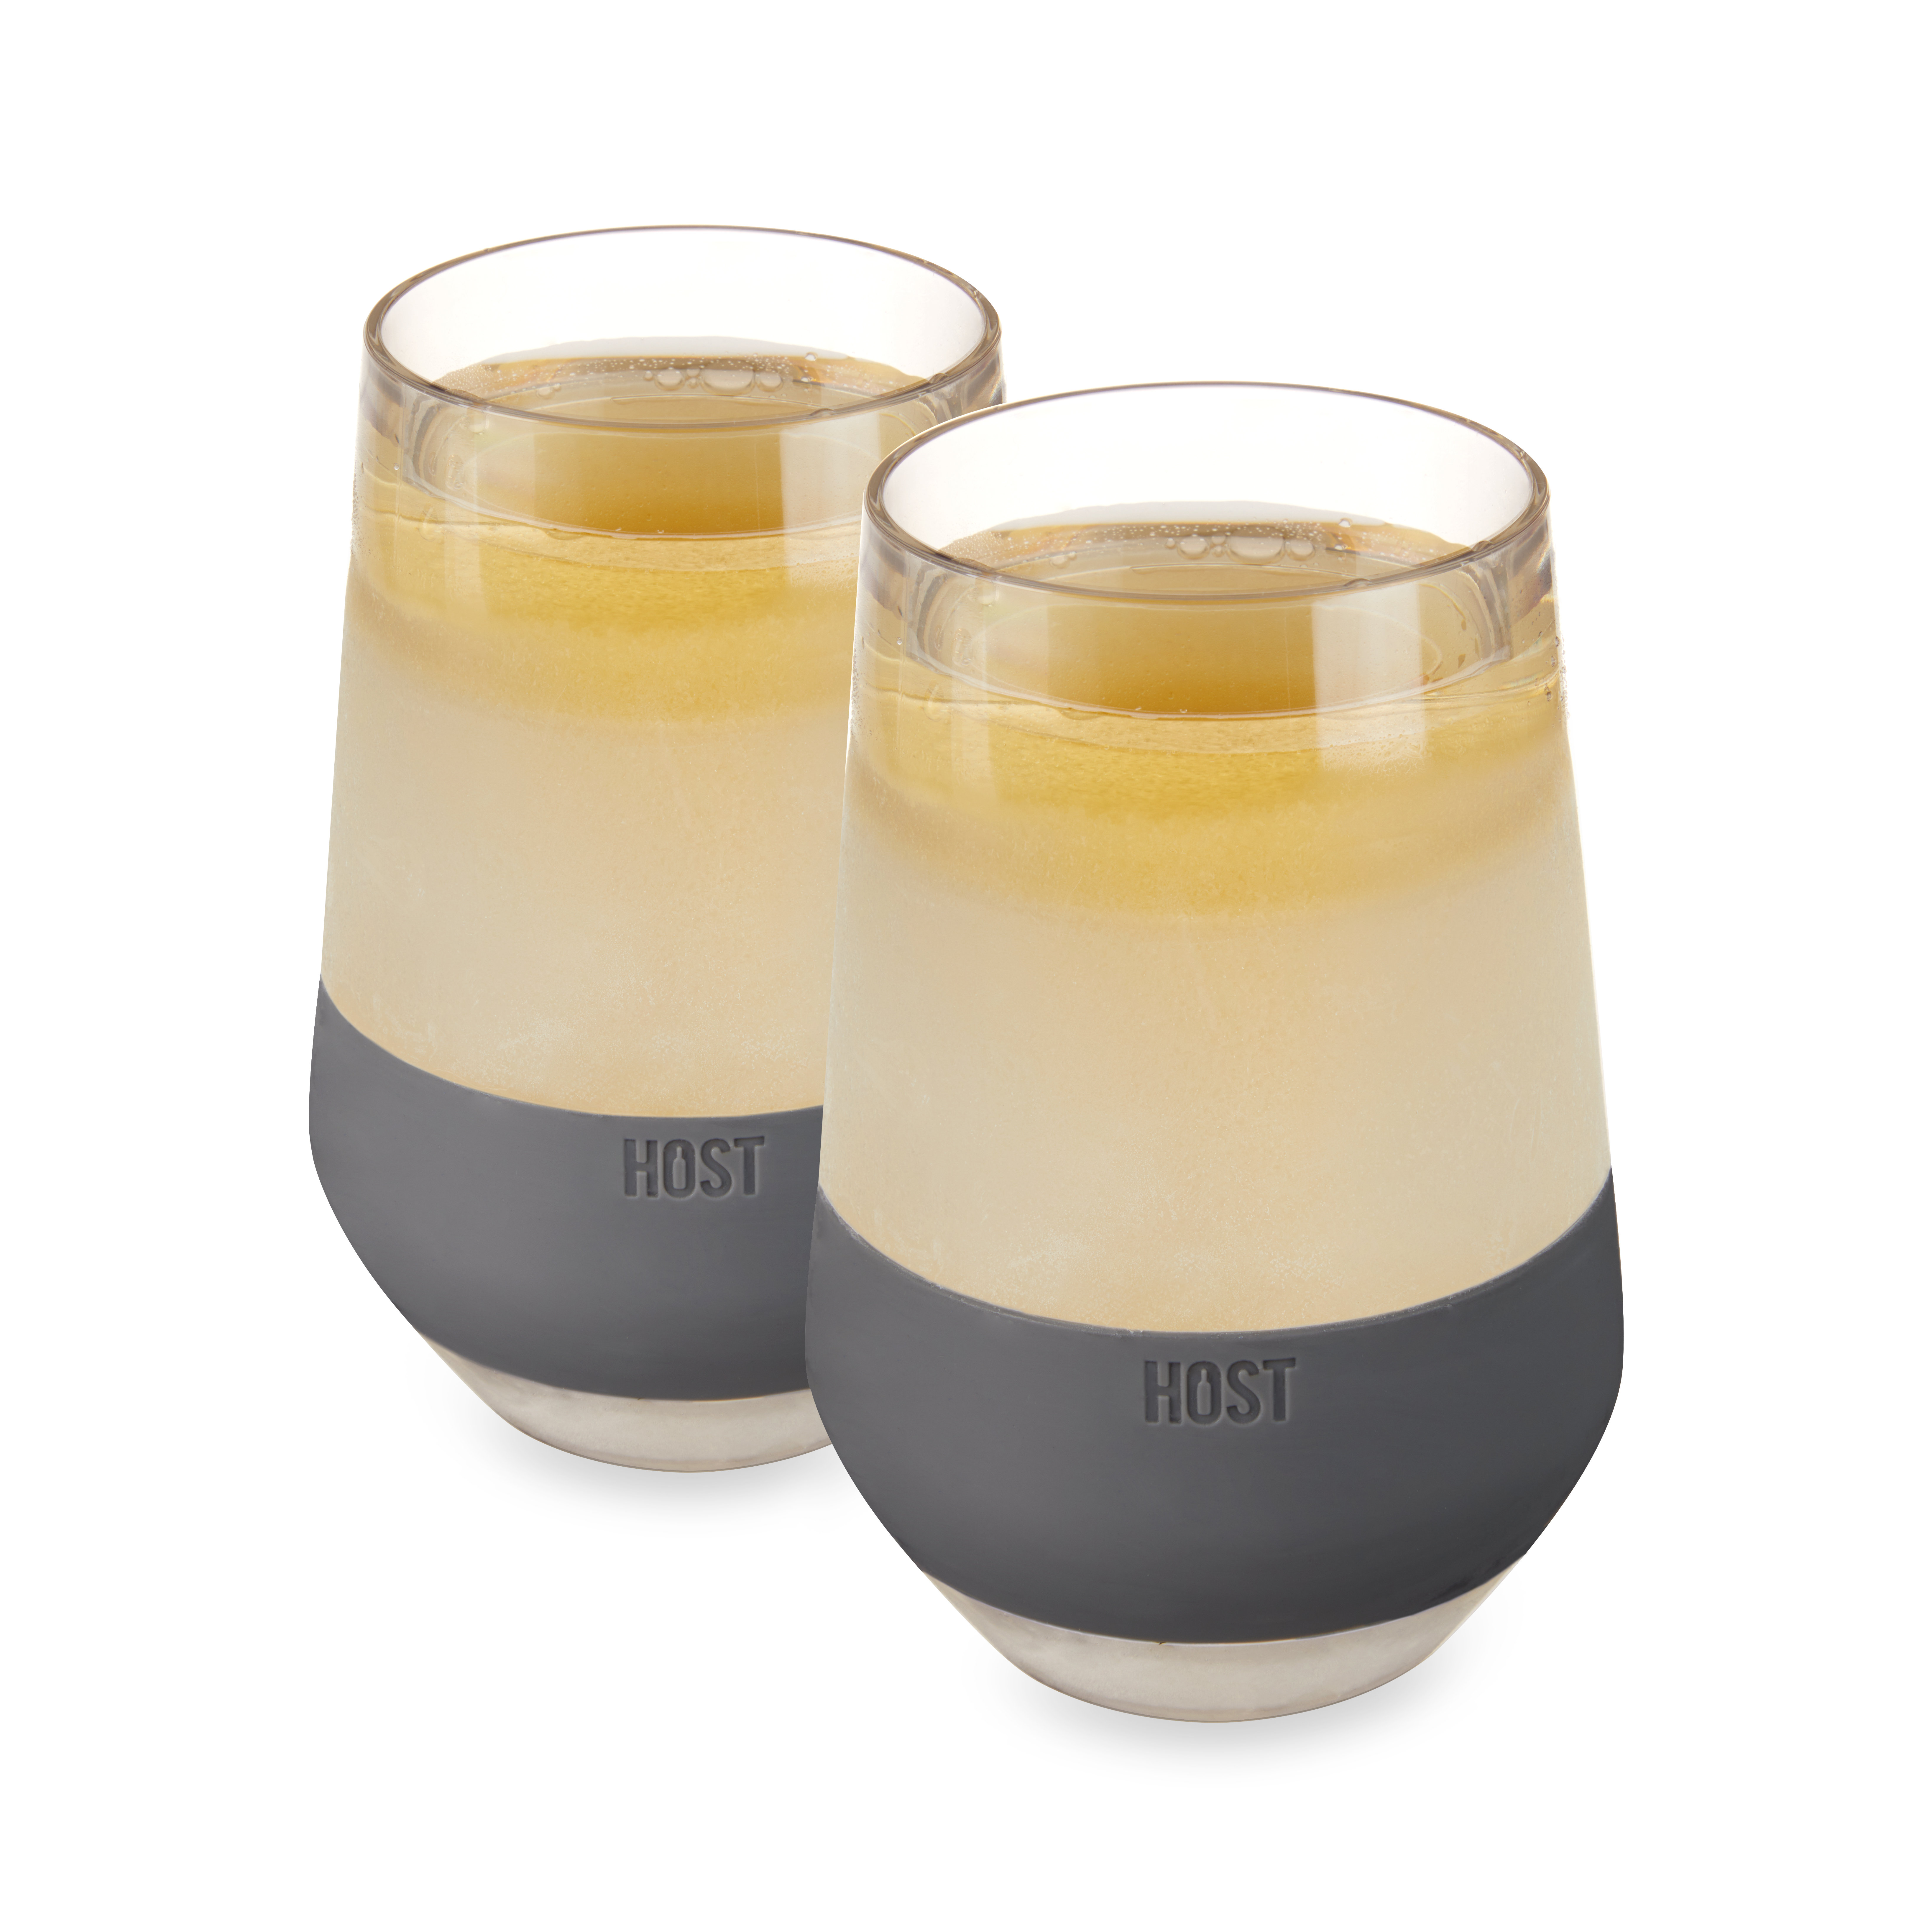 Viski Double Walled Cocktail Glasses - Insulated Martini Glasses with Cut Crystal Design - Dishwasher Safe Borosilicate Glass 8.5oz Set of 2